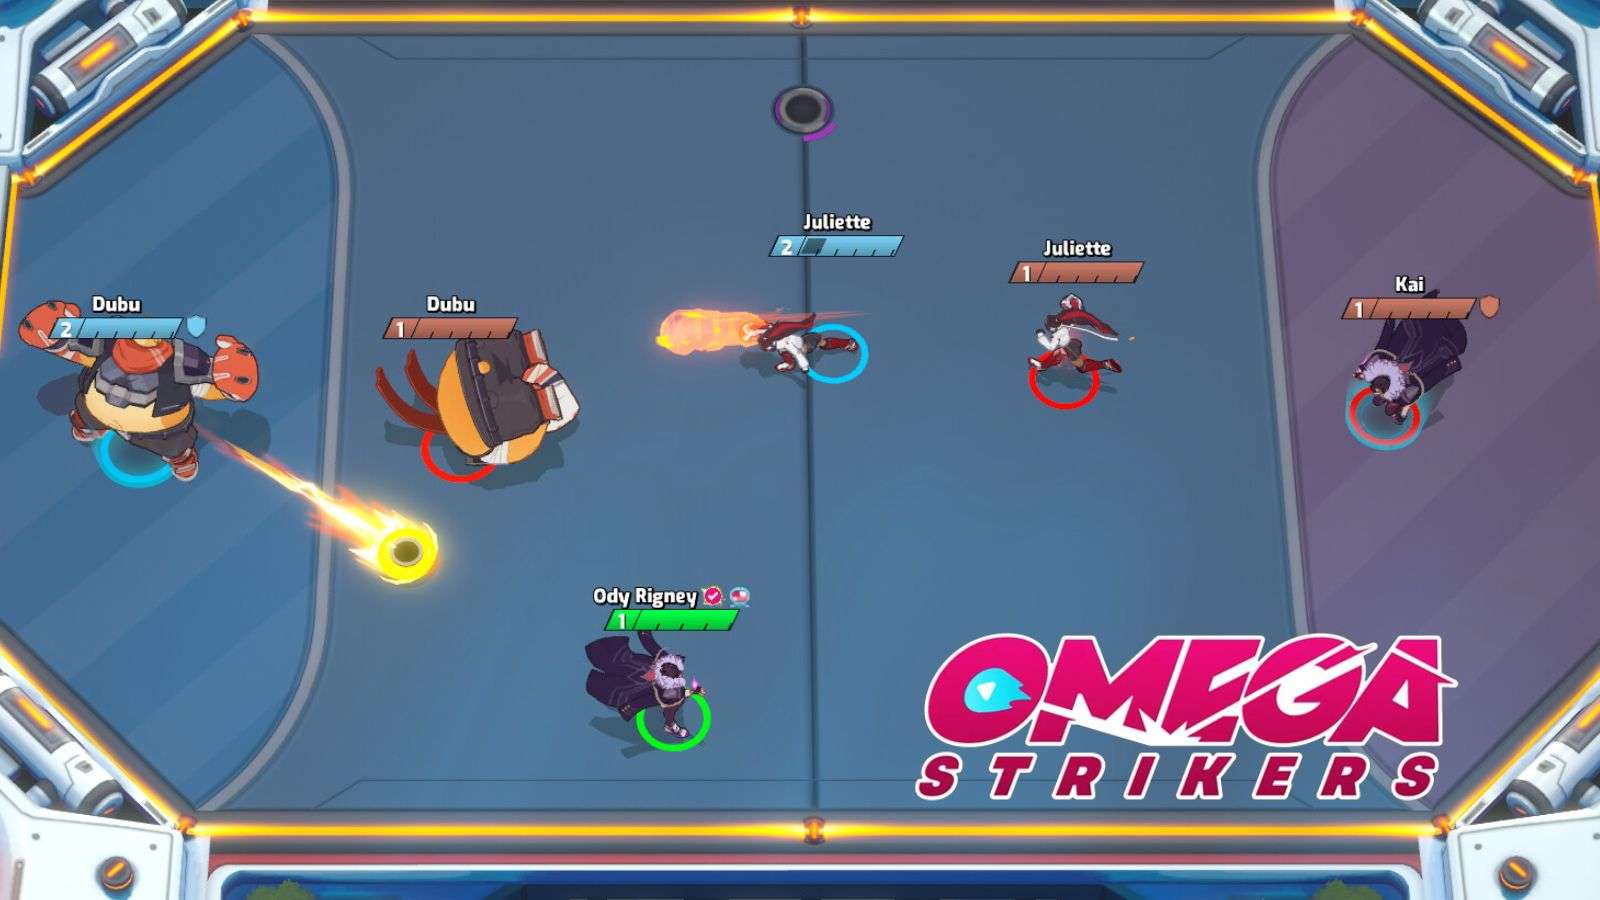 Omega strikers match